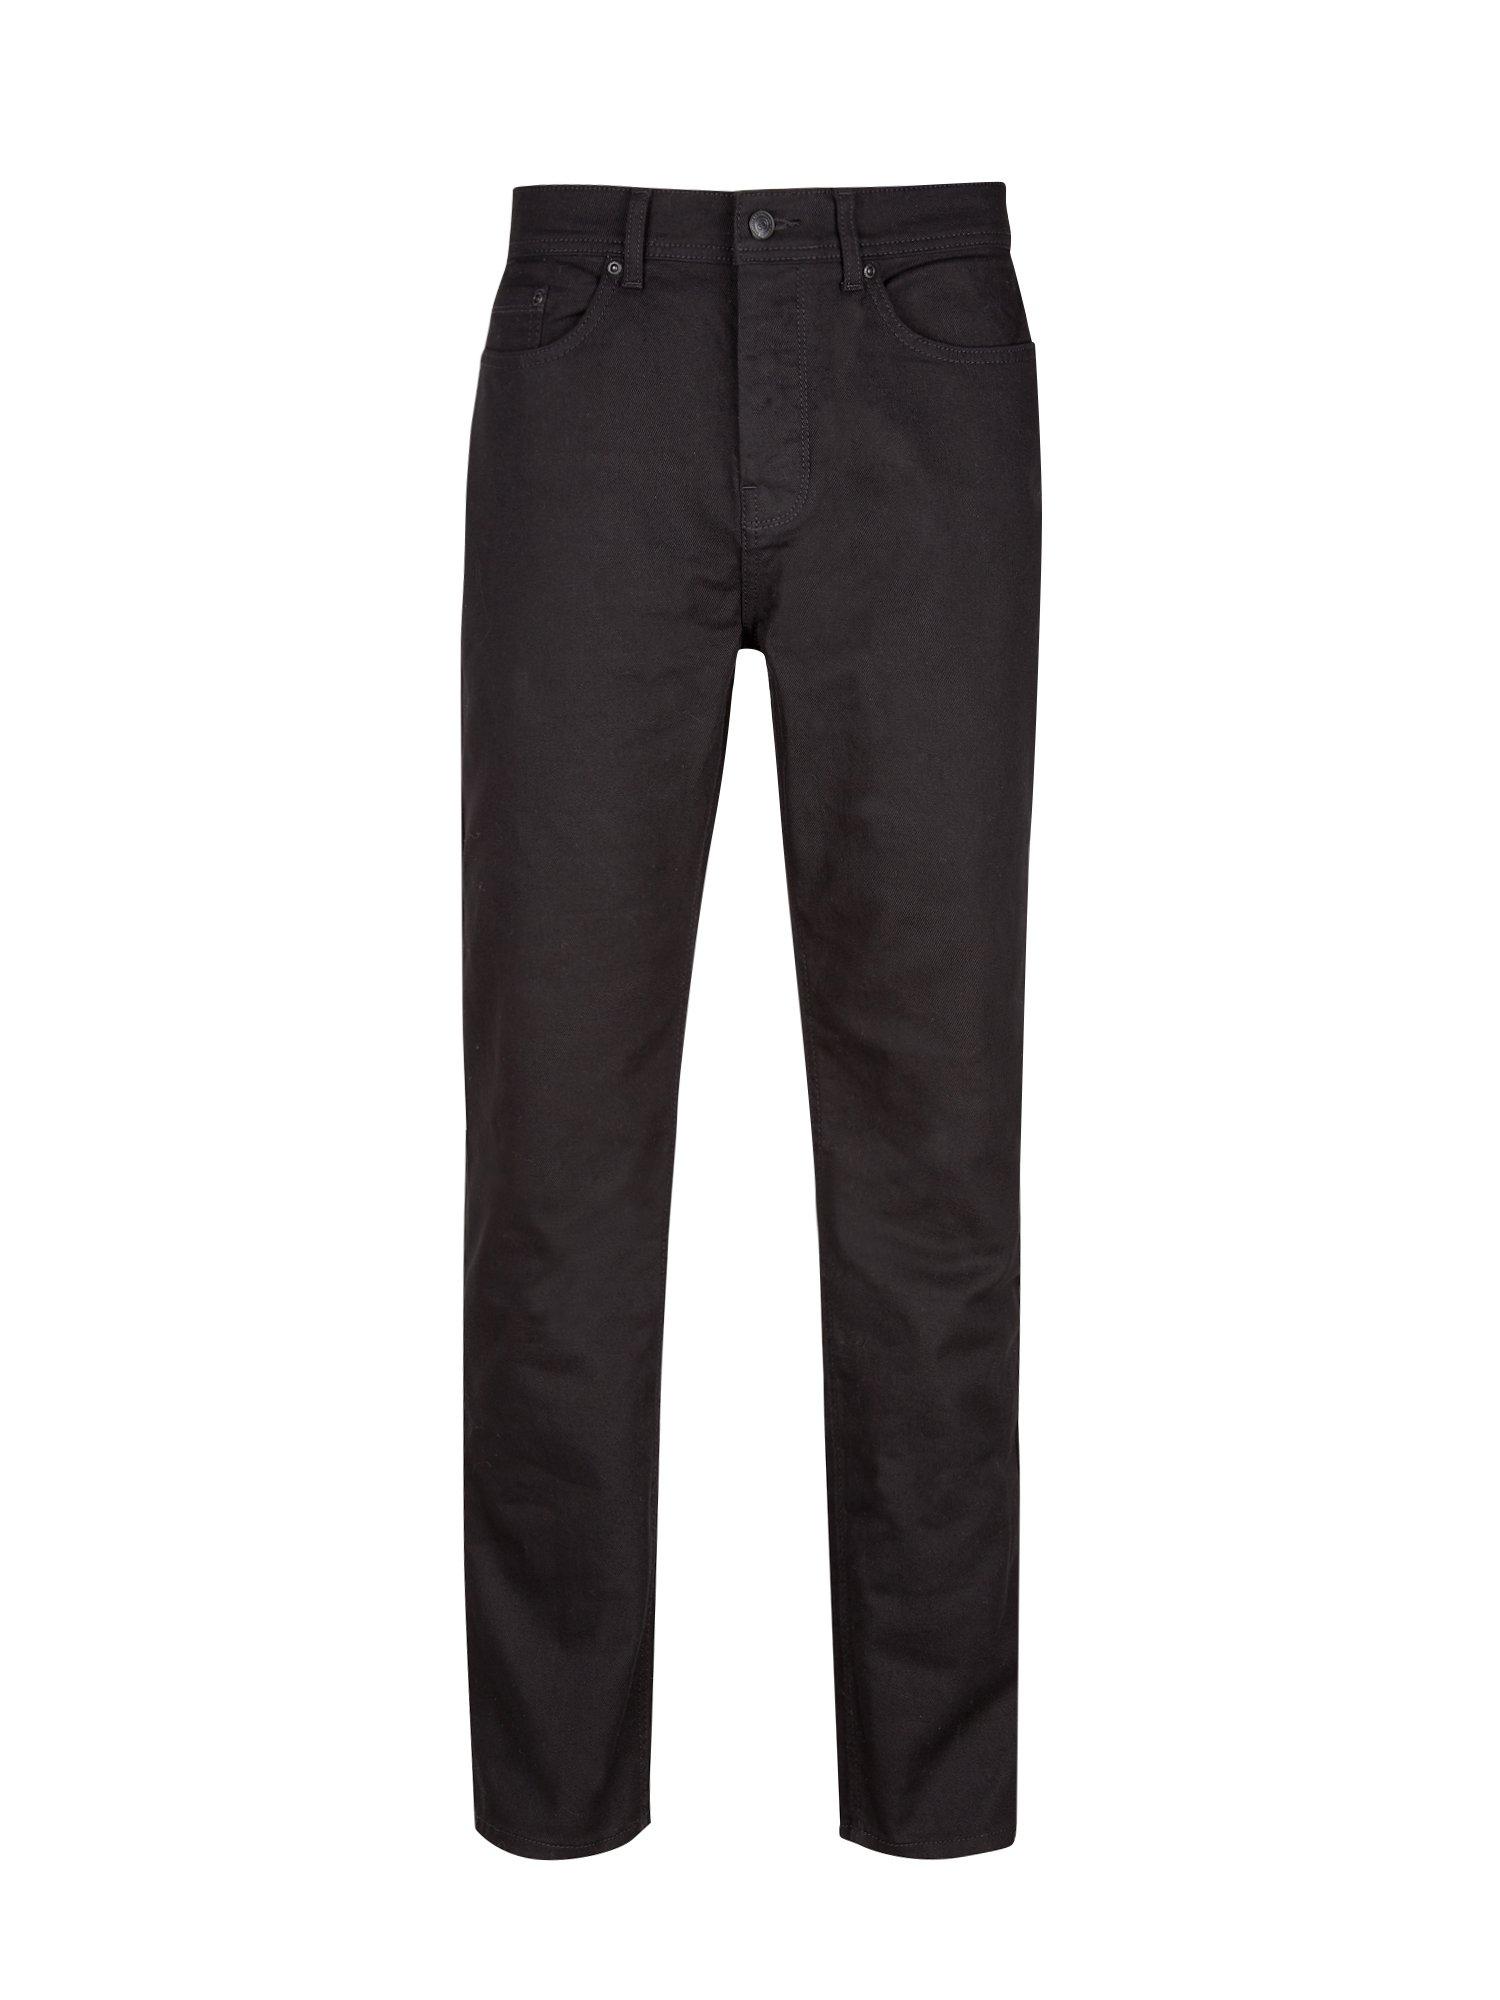 Black Straight Fit Stretch Jeans | Burton UK